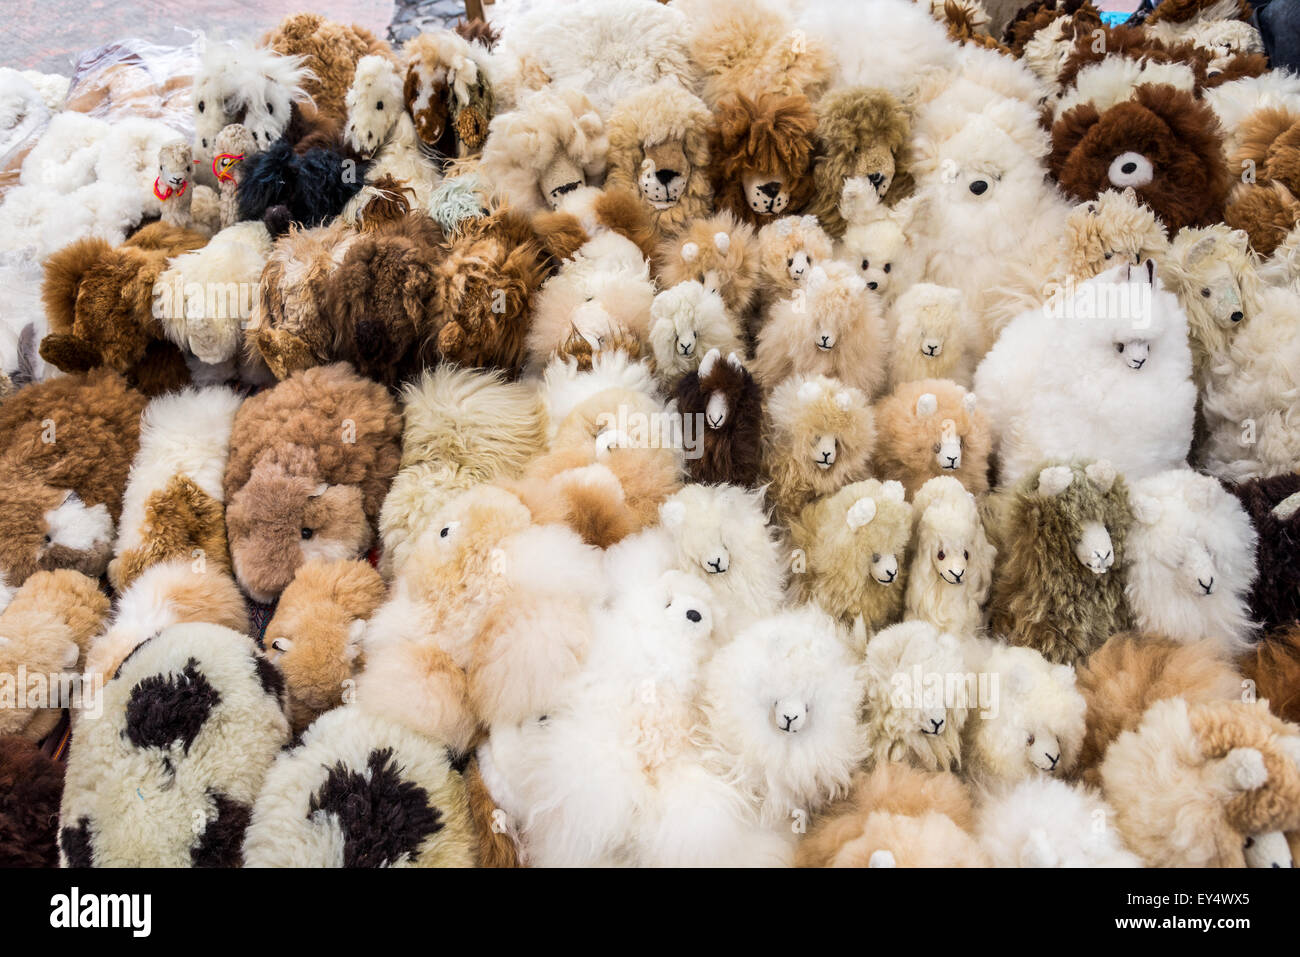 Stuffed animals for sale at local market. Otavalo, Ecuador. Stock Photo